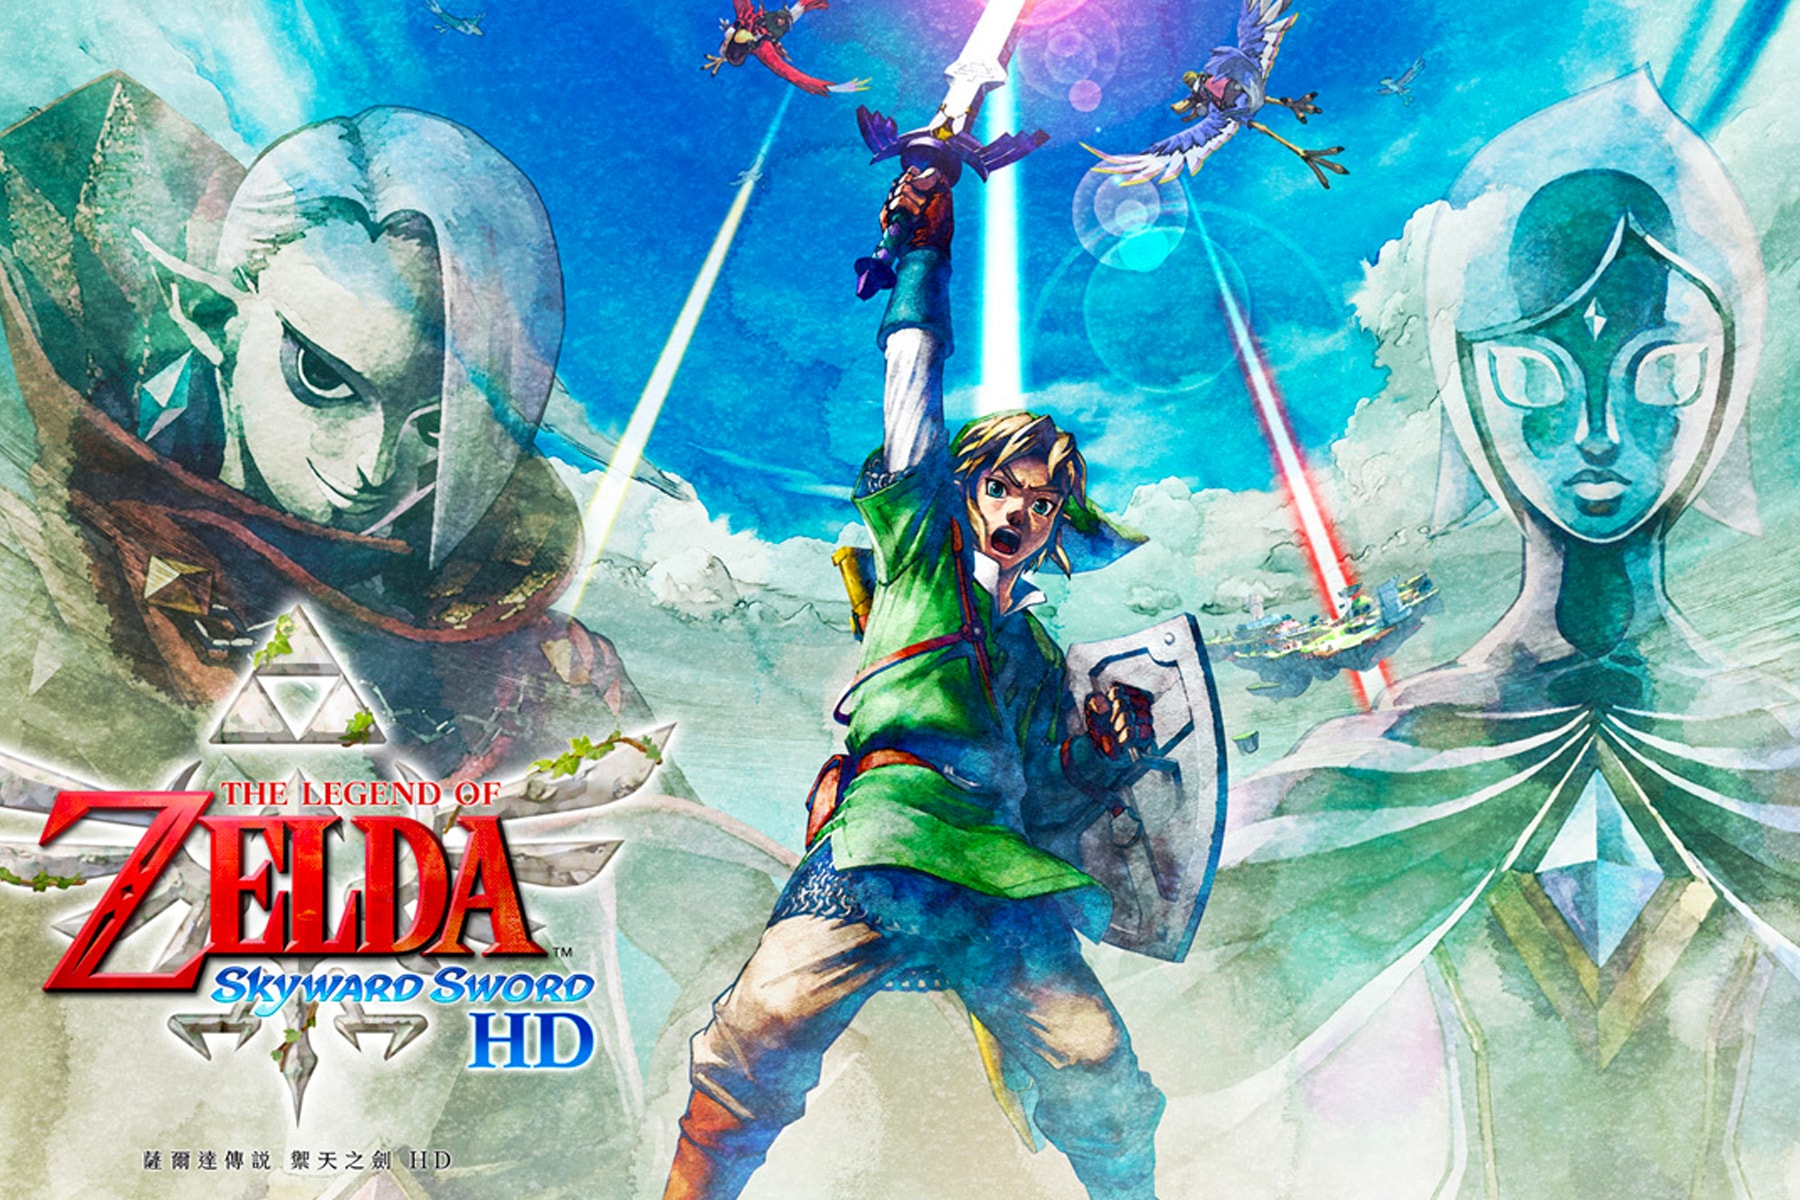 Nintendo Switch 即將推出全新重製版《薩爾達傳說 天空之劍 HD》